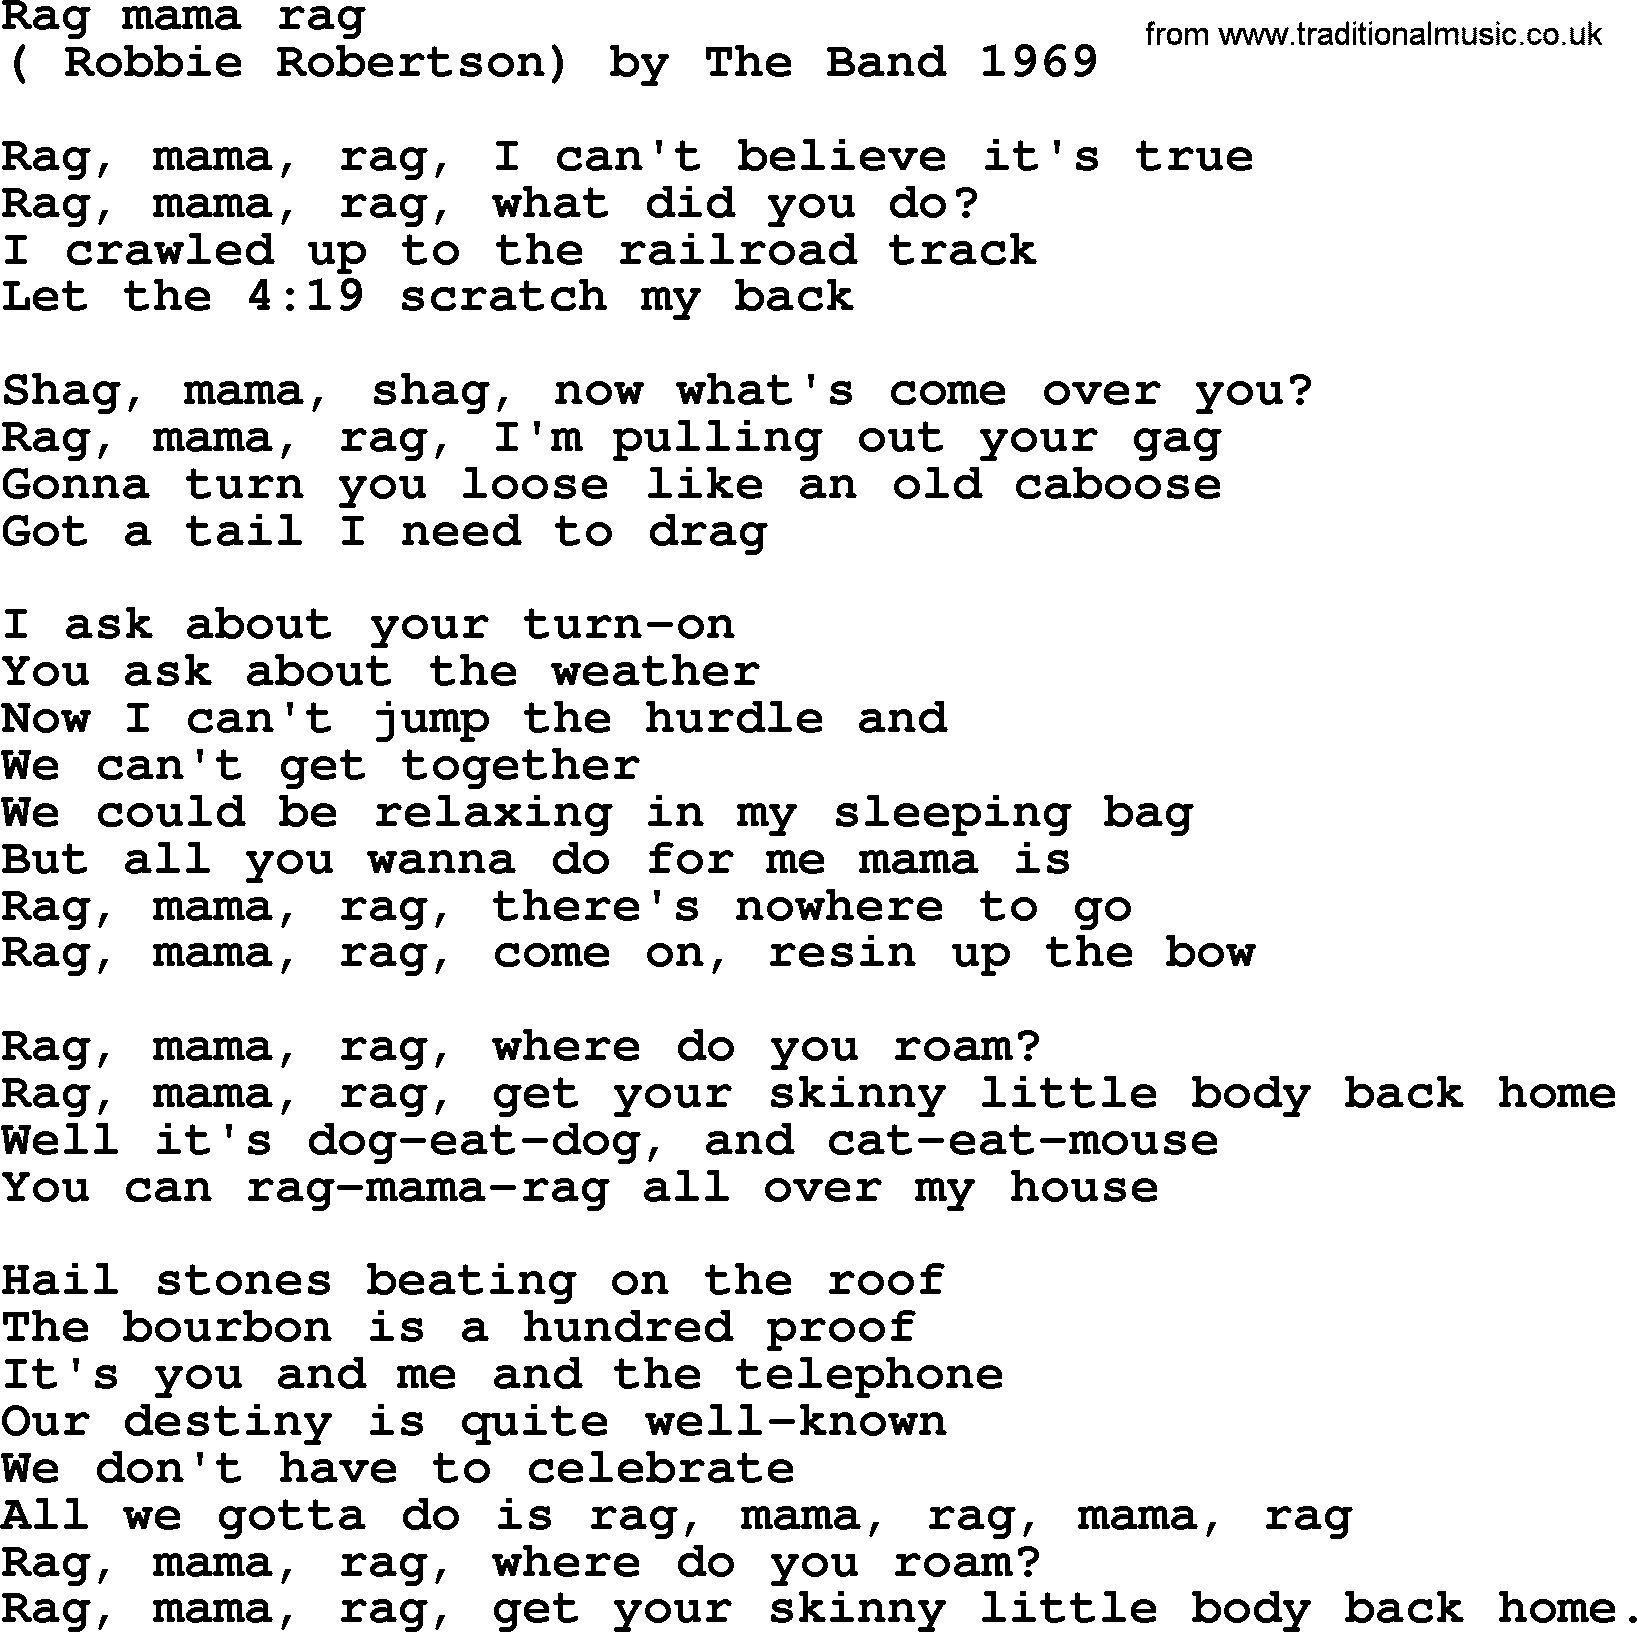 Bruce Springsteen song: Rag Mama Rag lyrics